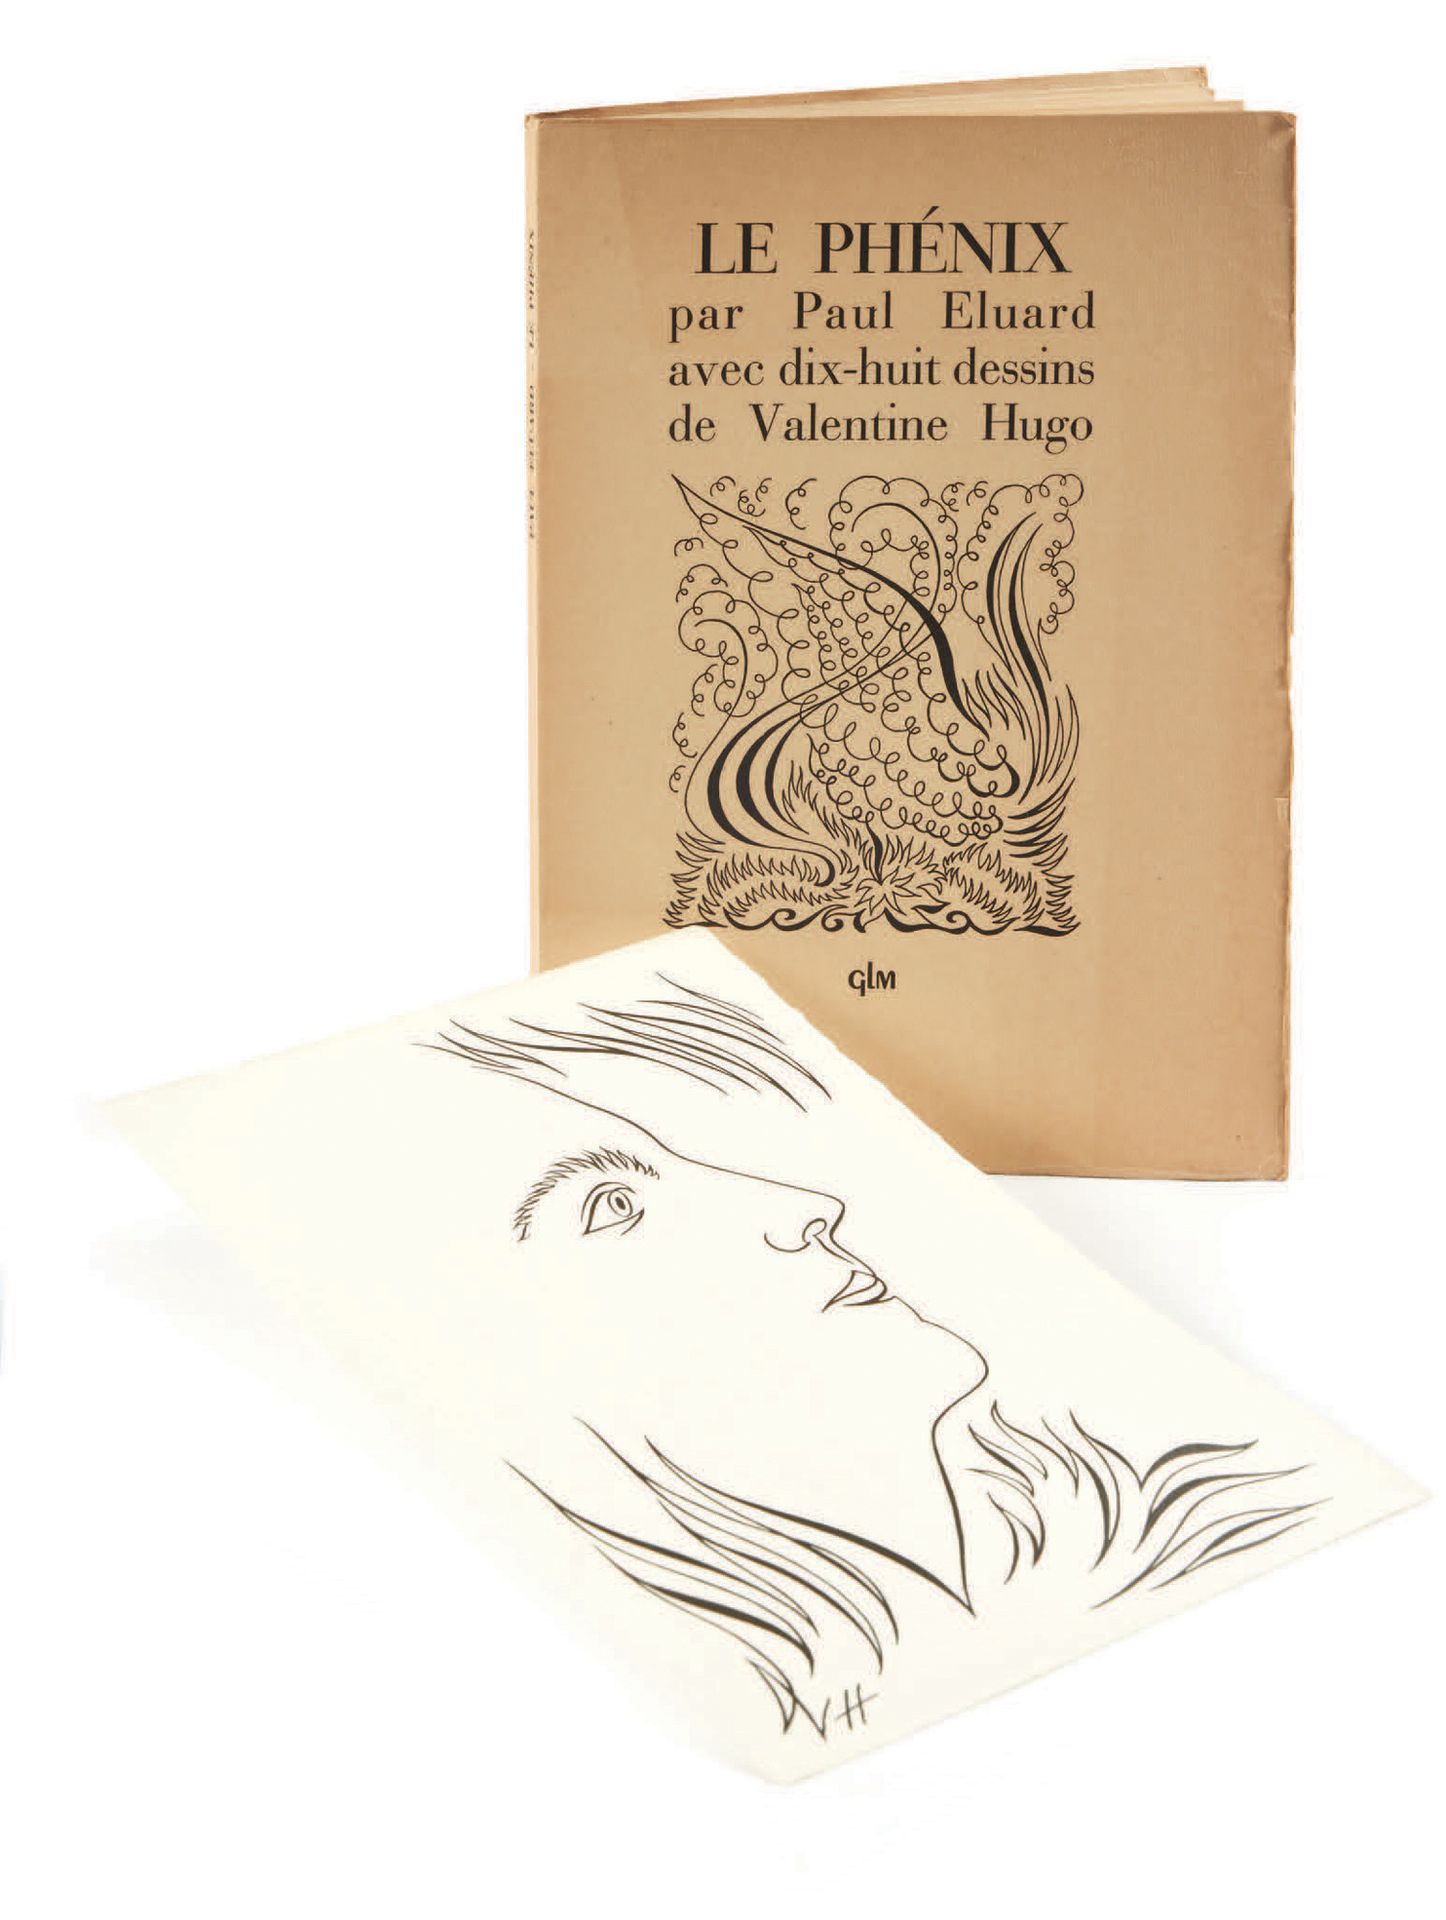 Paul Eluard. Le Phénix con diciotto disegni di Valentine Hugo. Parigi, GLM, 1952&hellip;